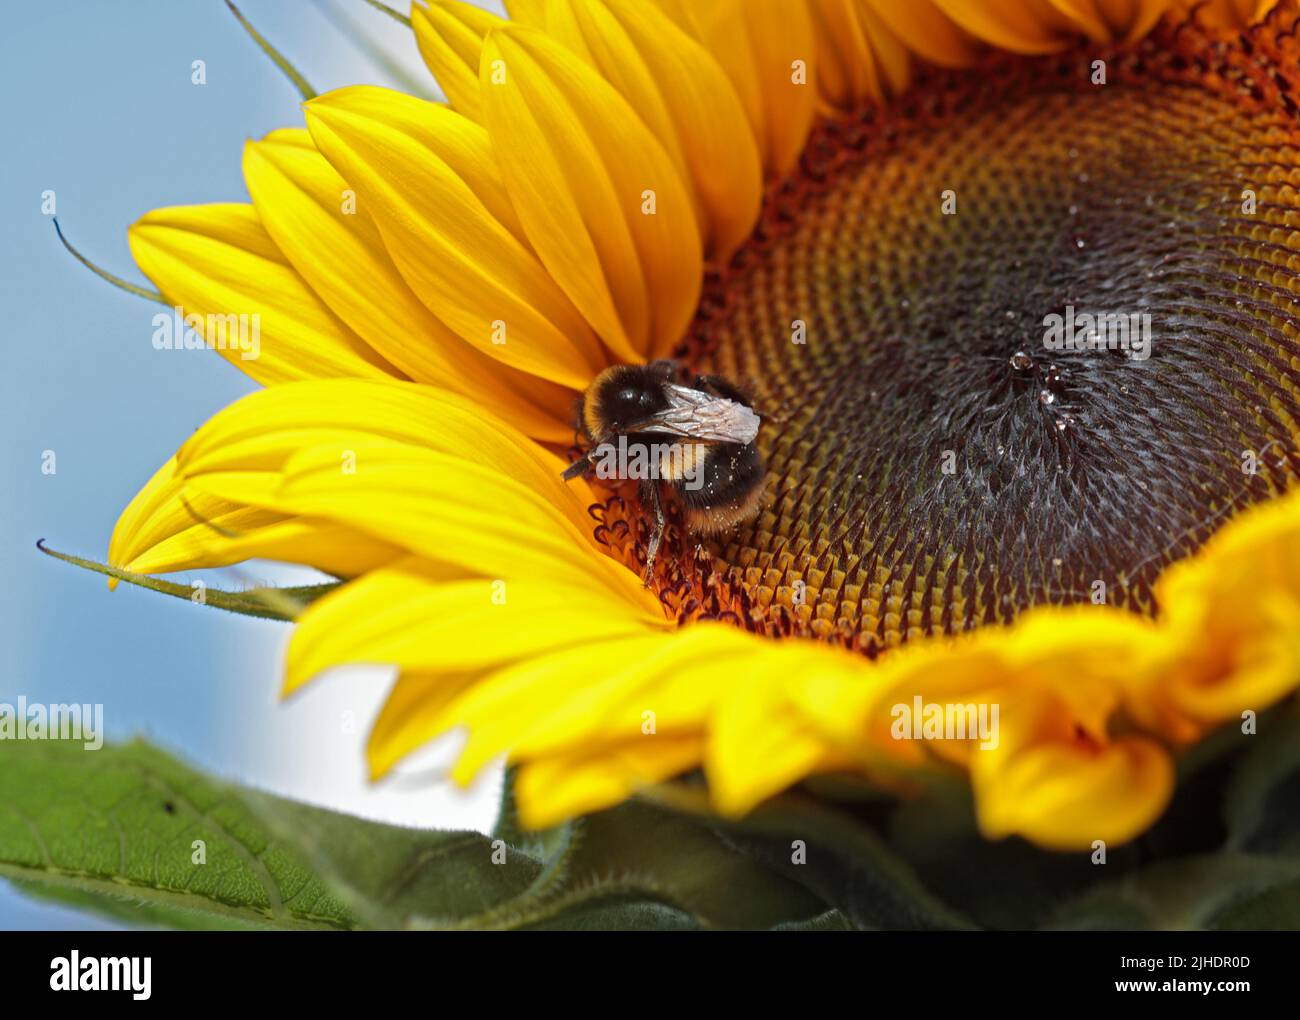 Bumbe Bee on Sunflower Elite Sun F1, Wales Stock Photo